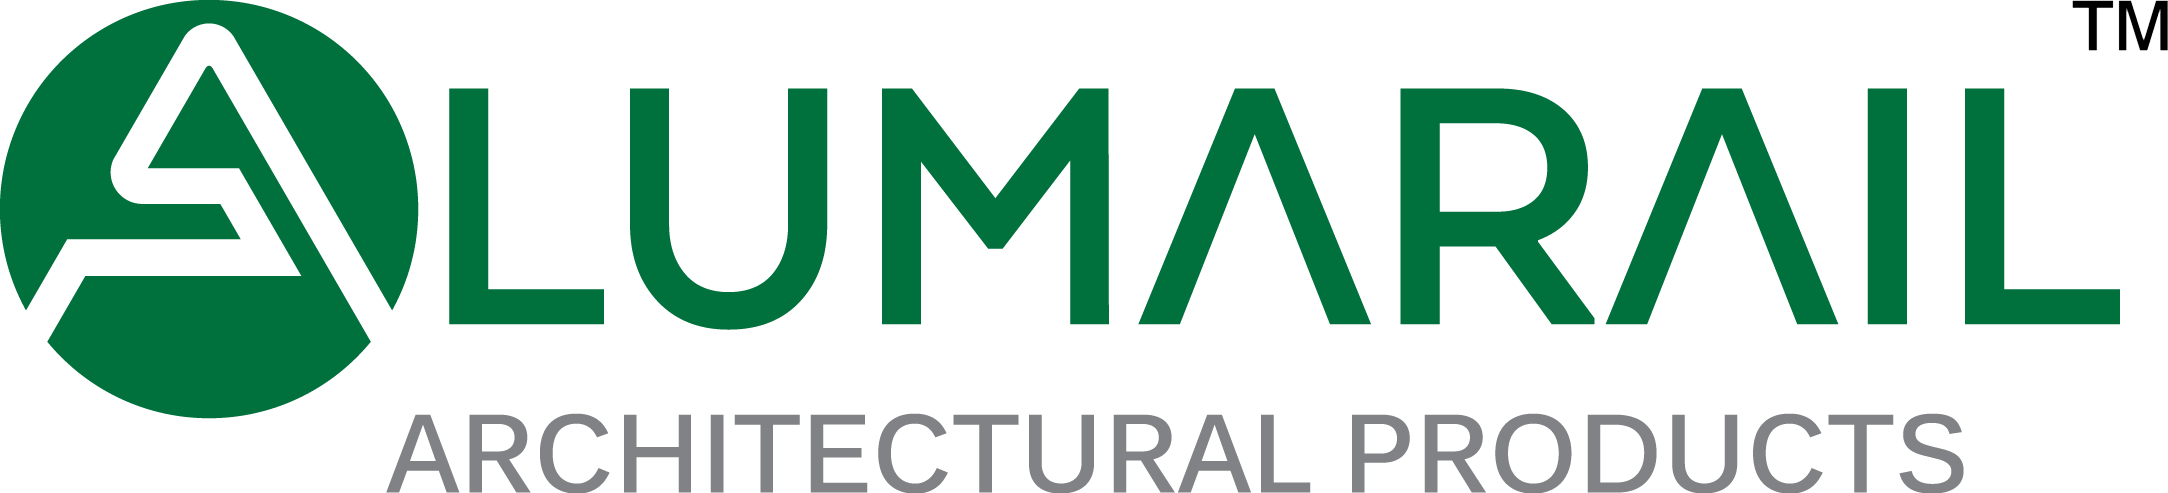 Alumarail Logo new TM